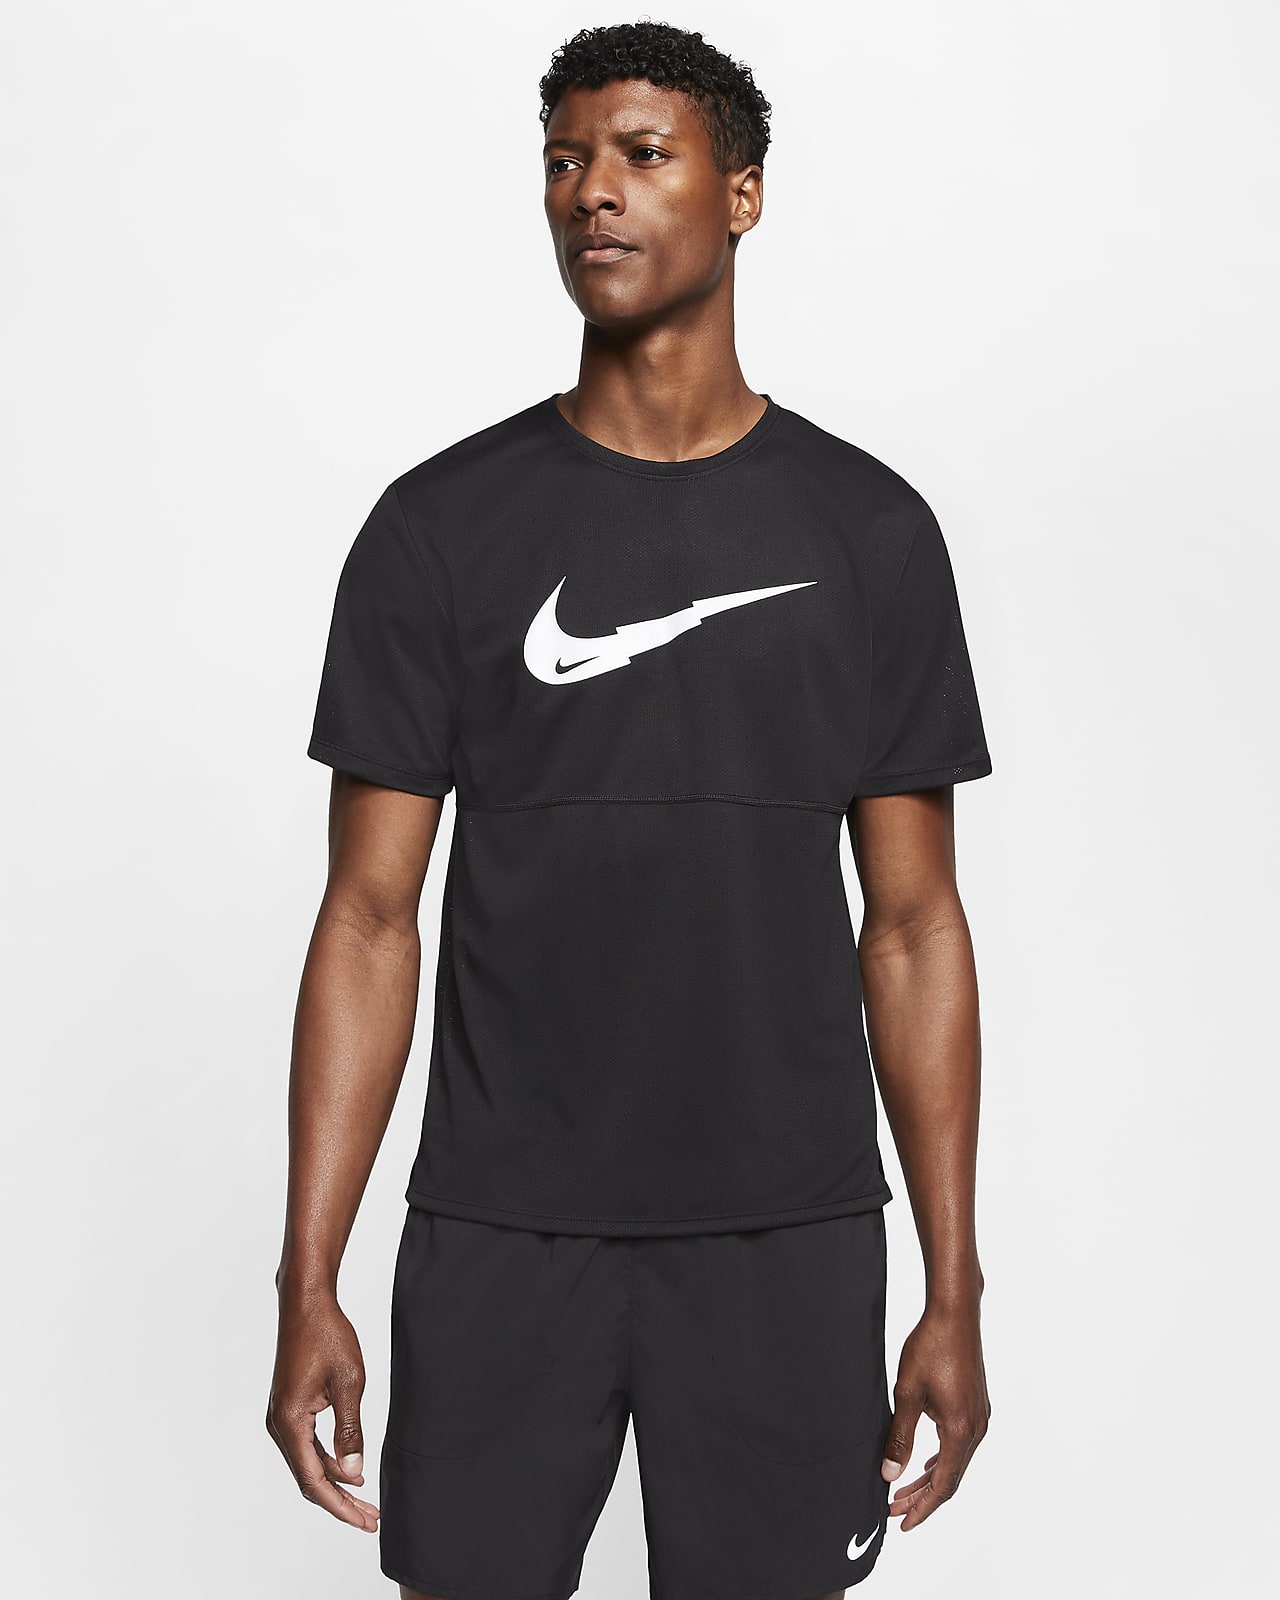 Nike Mens Breathe Running T-Shirt 